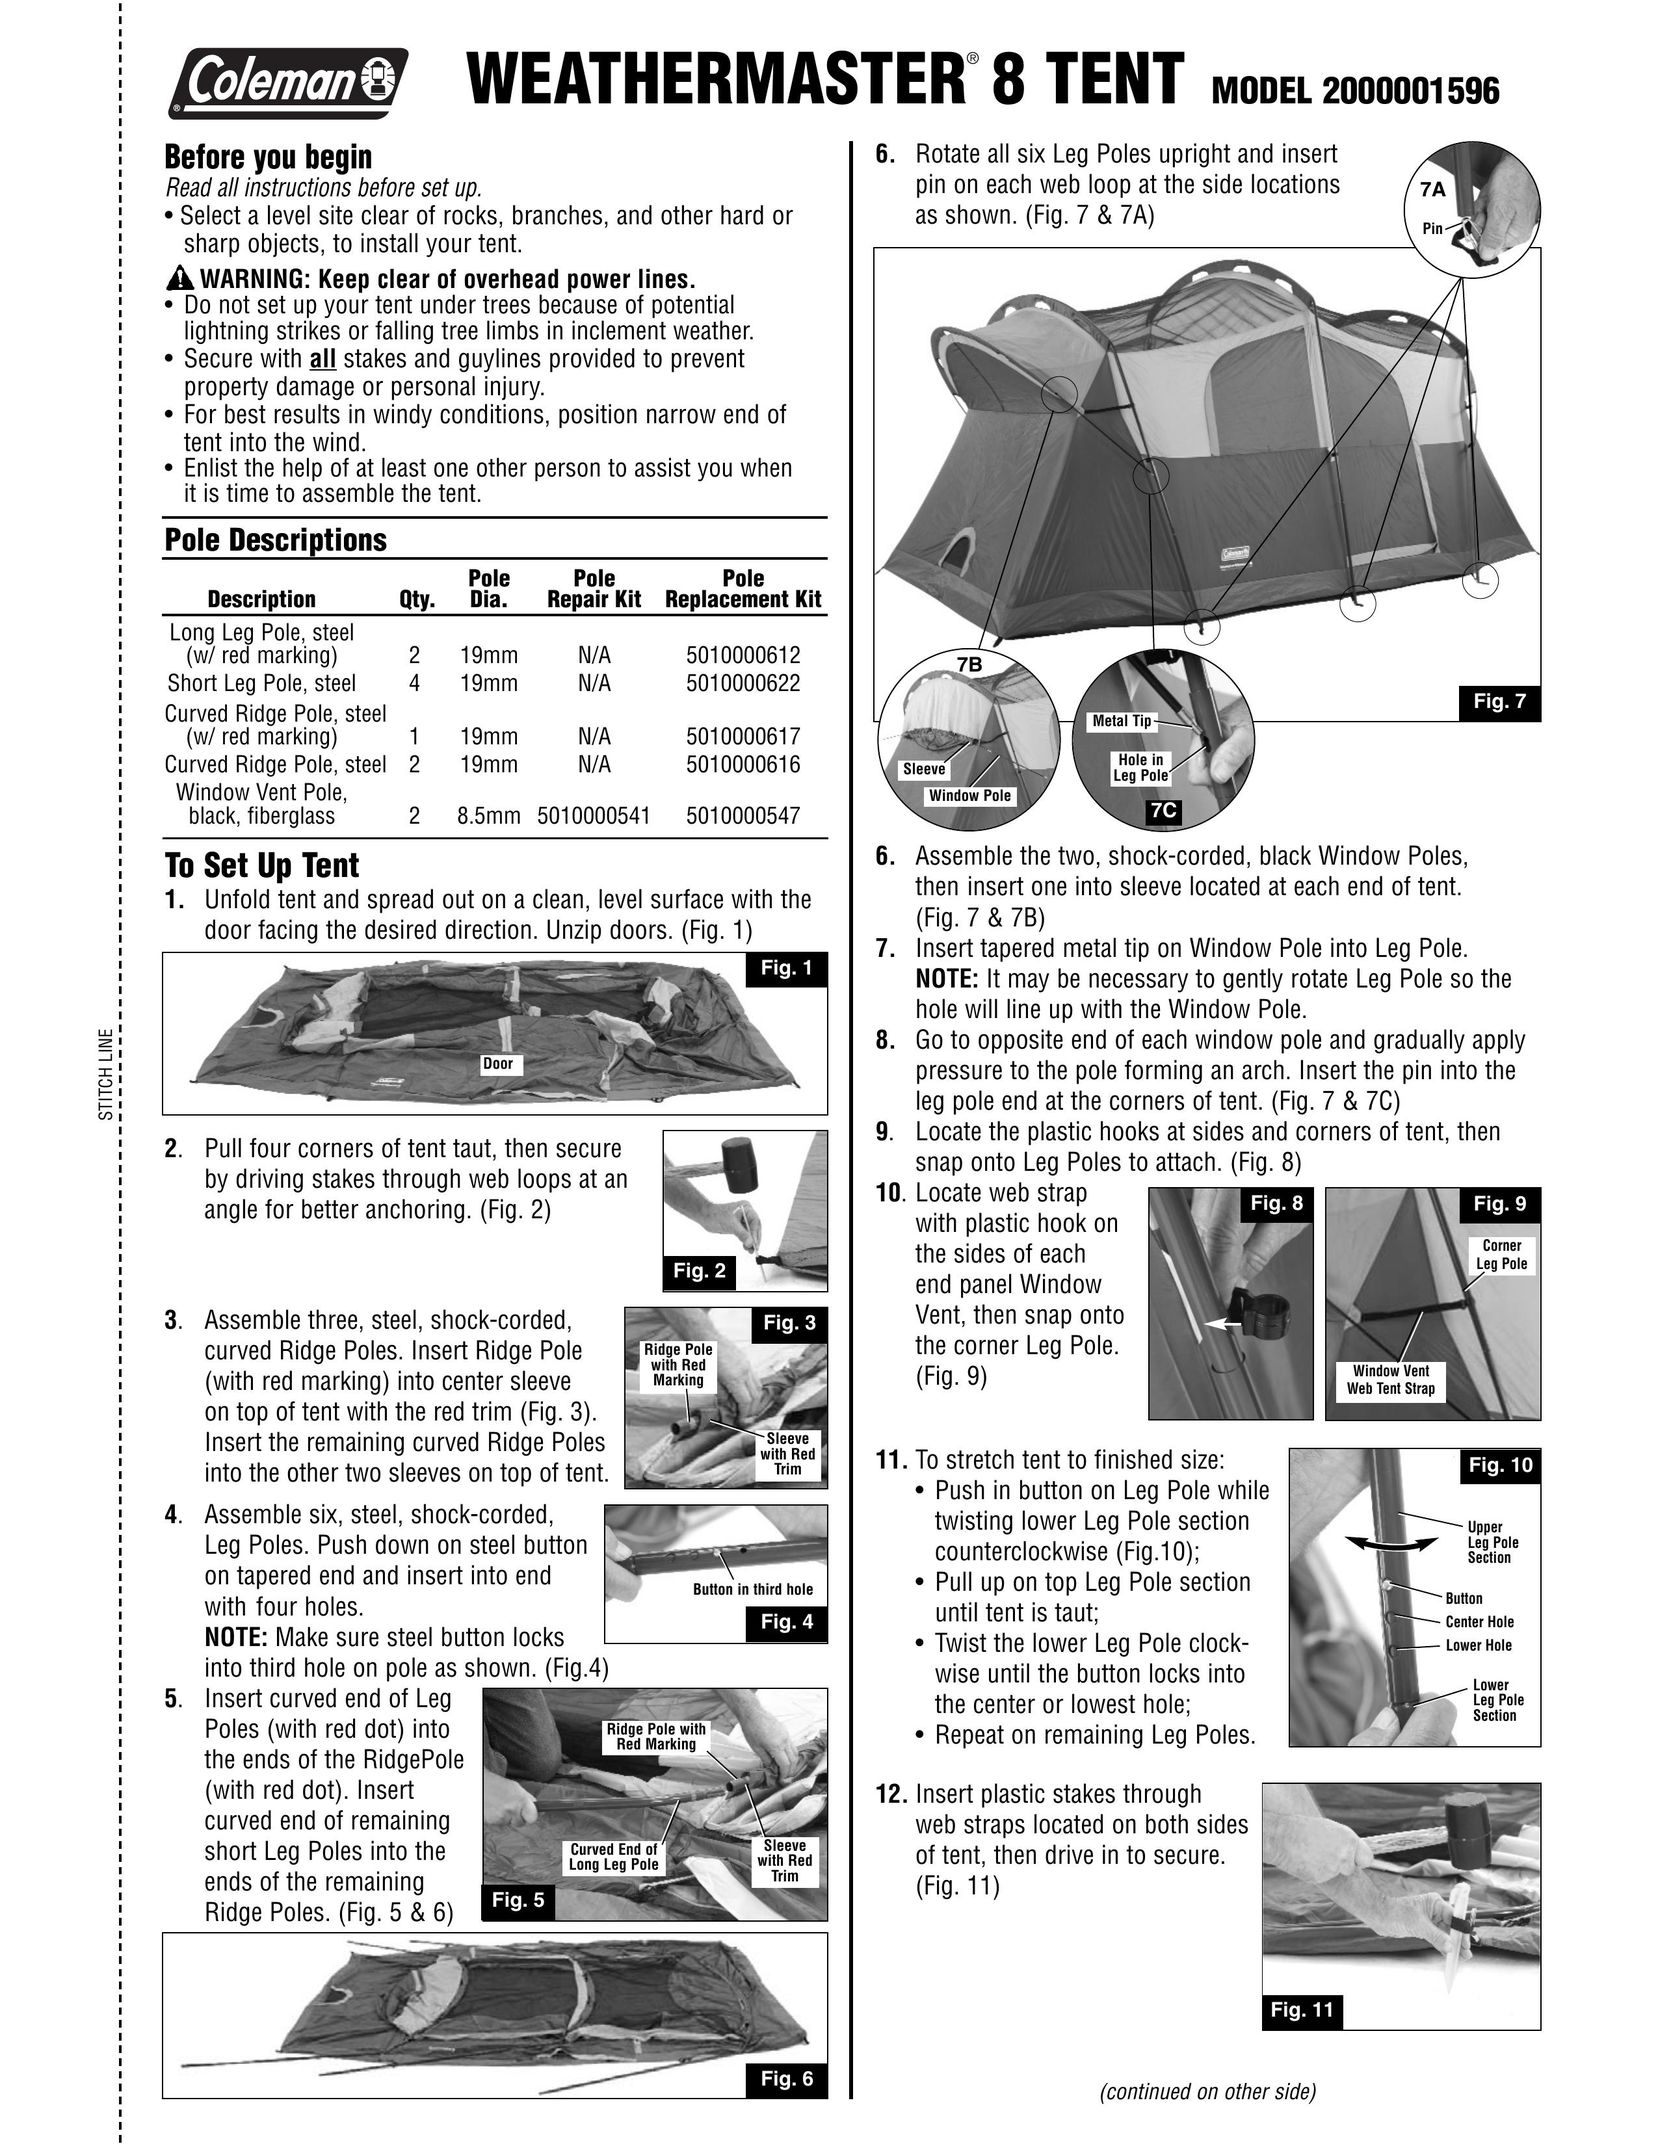 Coleman 2000001596STITCHLINE Tent User Manual